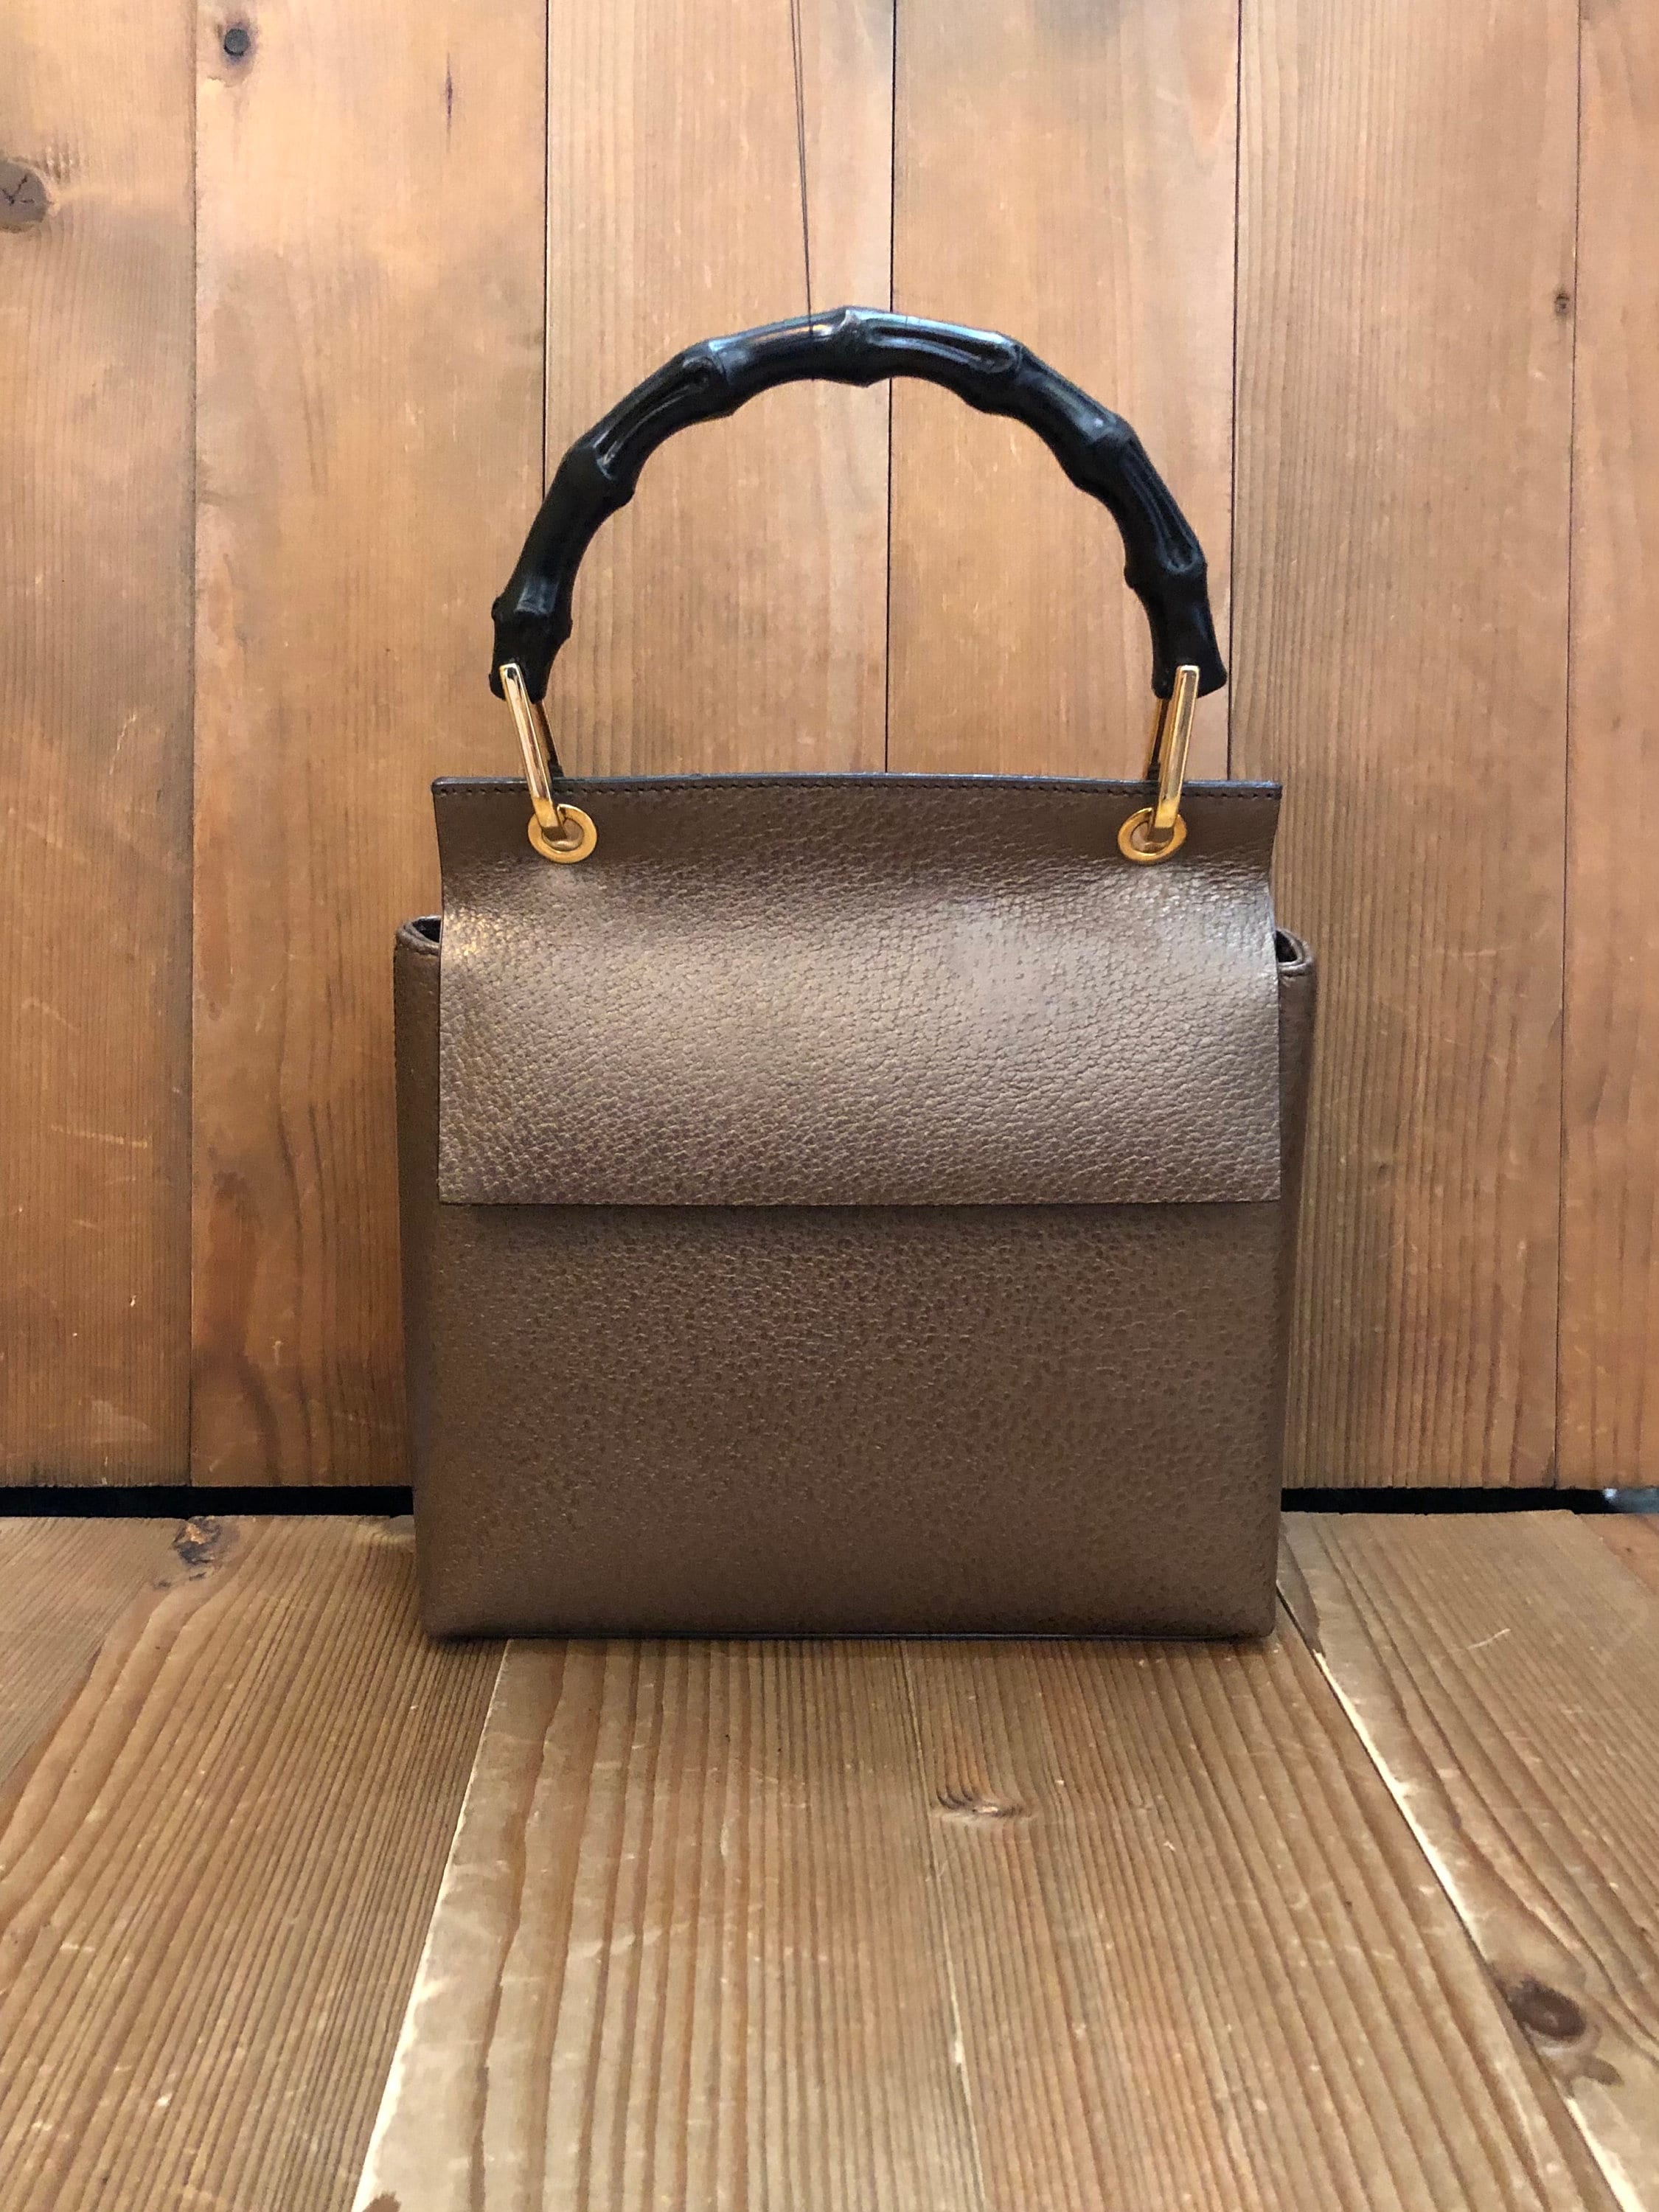 Vintage Gucci Leather Handbag with Carved Wood Handle